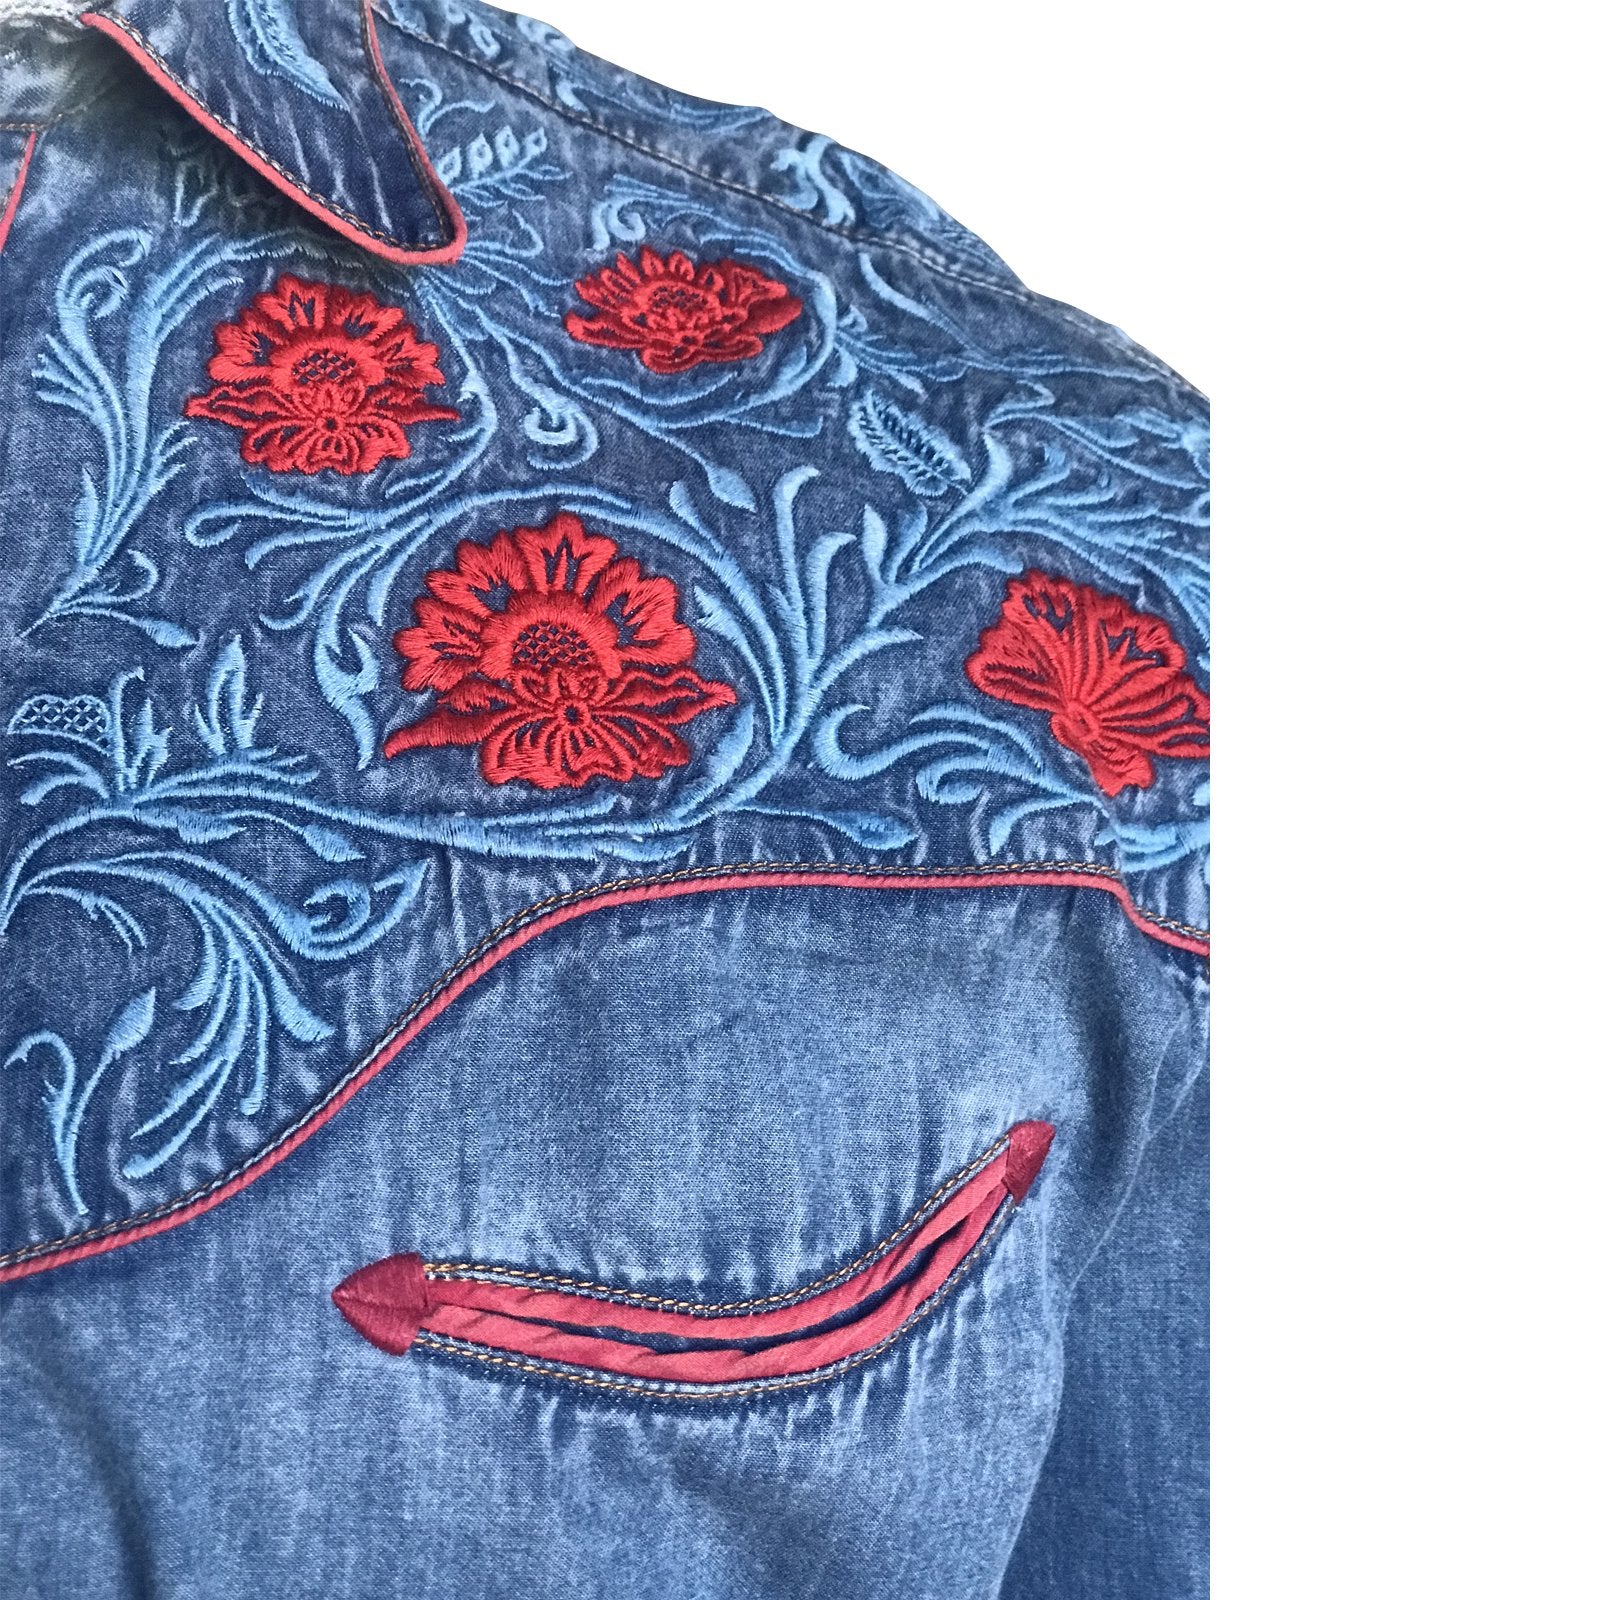 Rockmount Ranch Wear Men's Embroidered Roses on Denim Detail